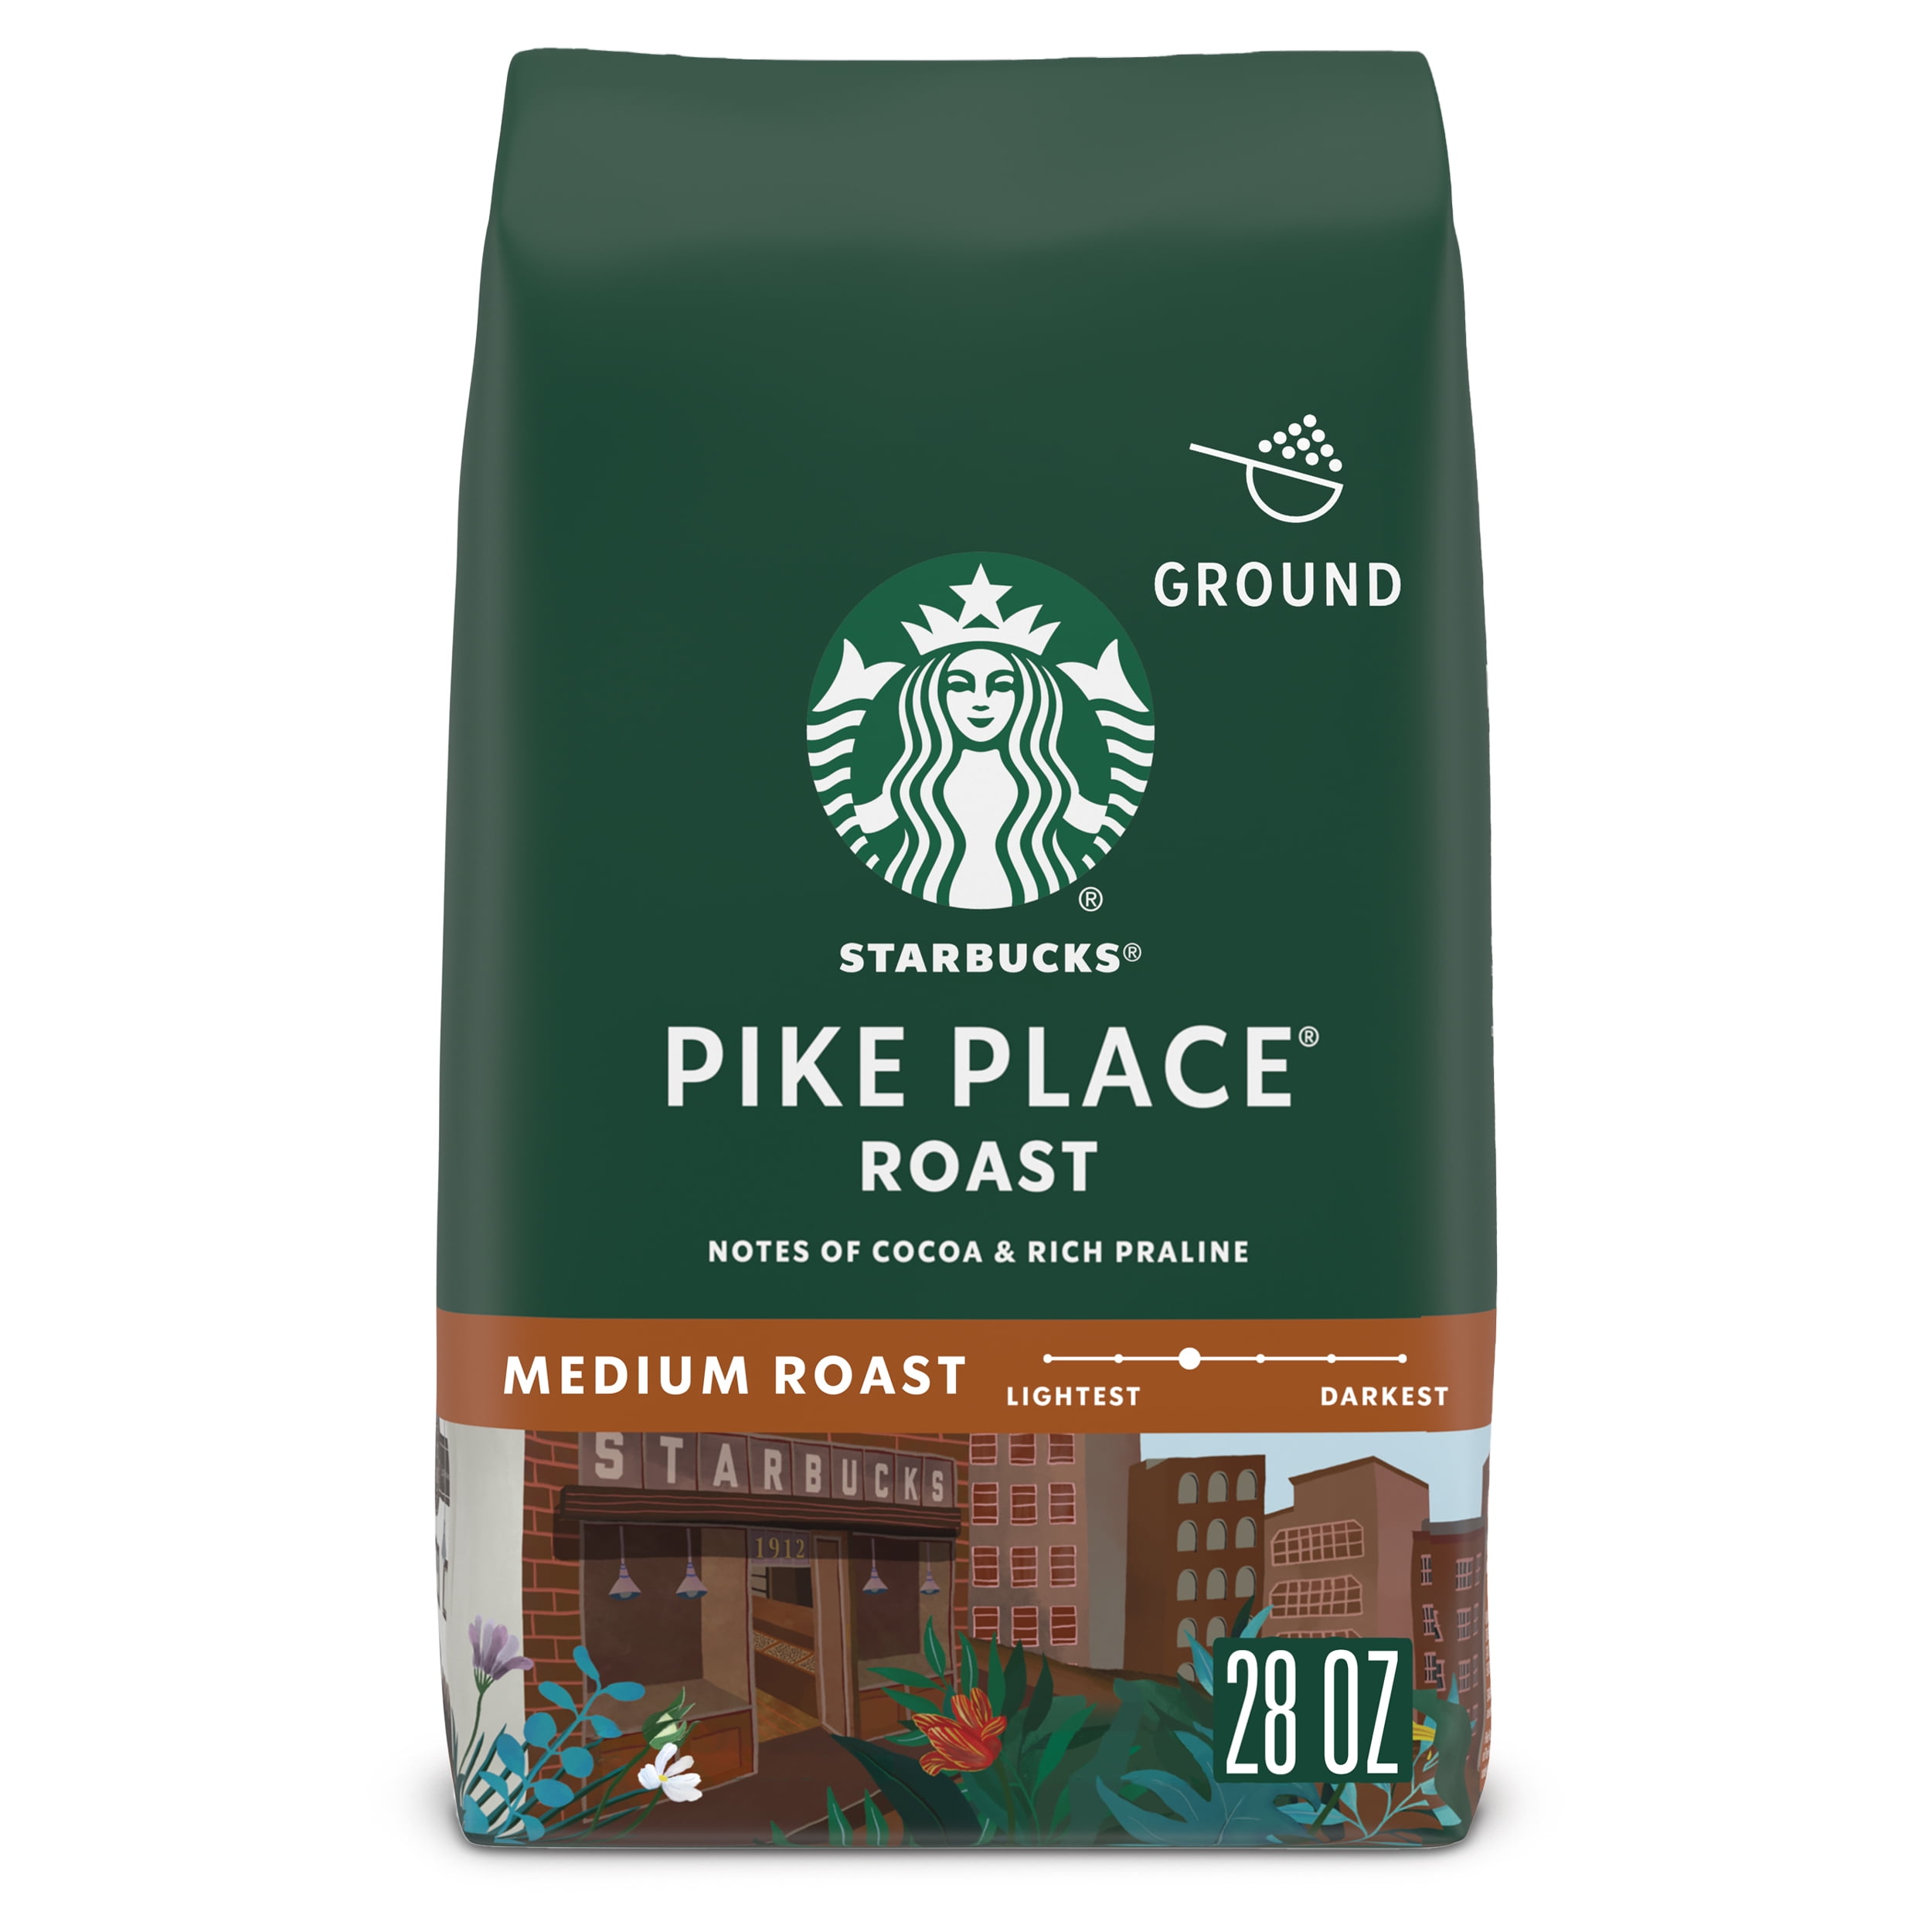 Starbucks Pike Place Roast, Ground Coffee, Medium Roast, 28 oz